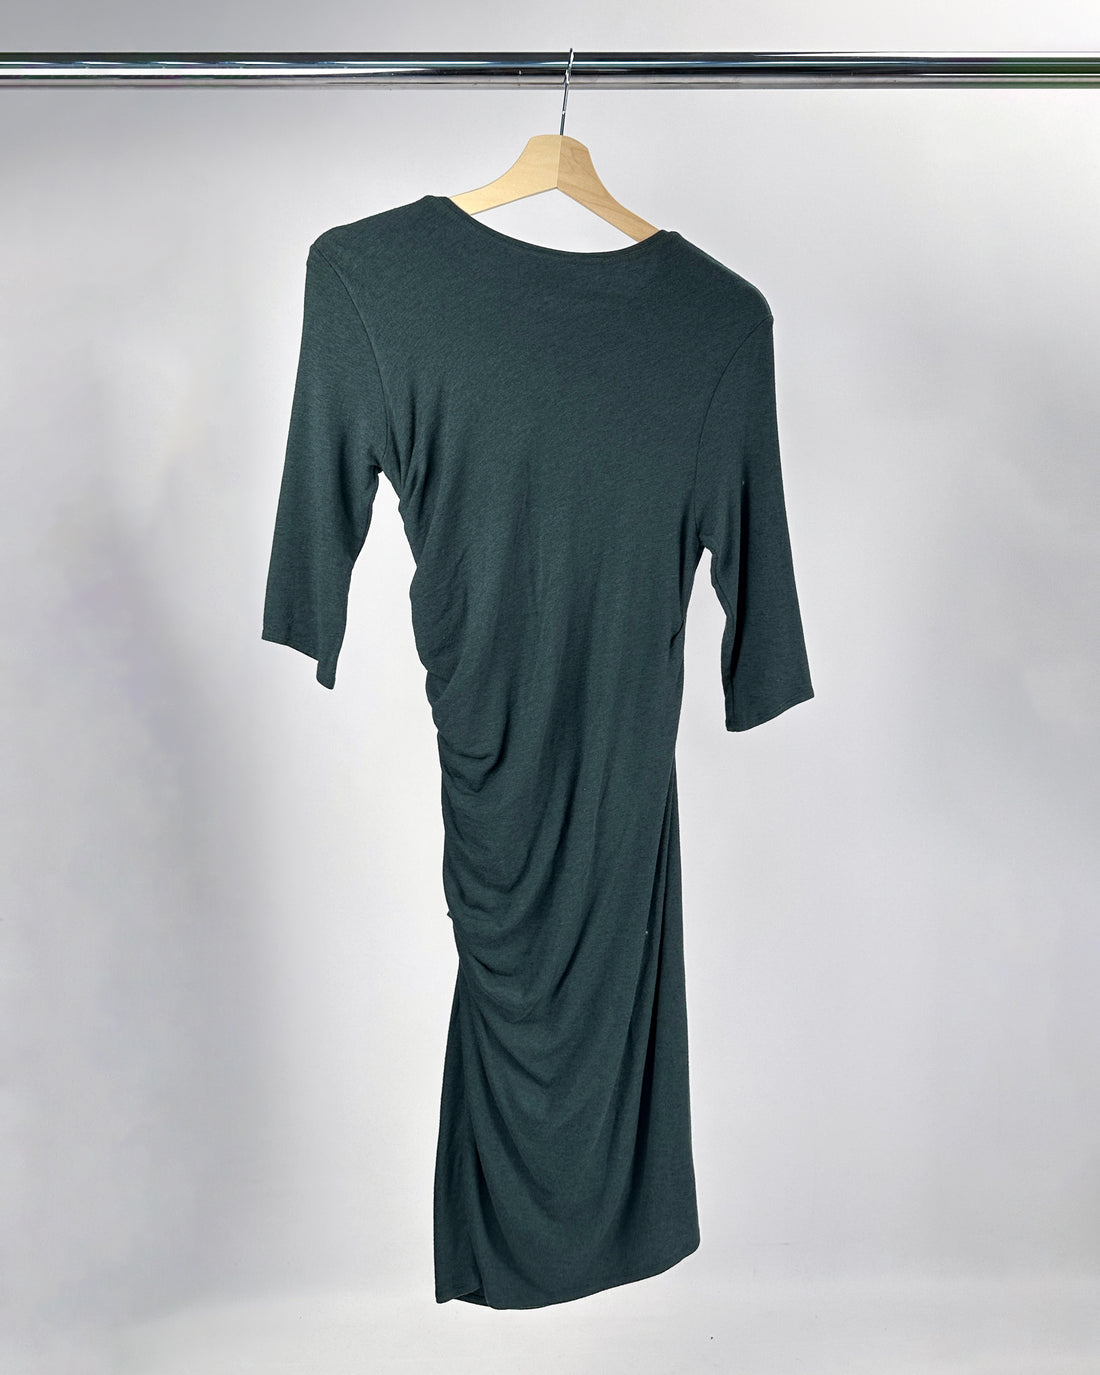 Helmut Lang Green Pleated Dress 2000's